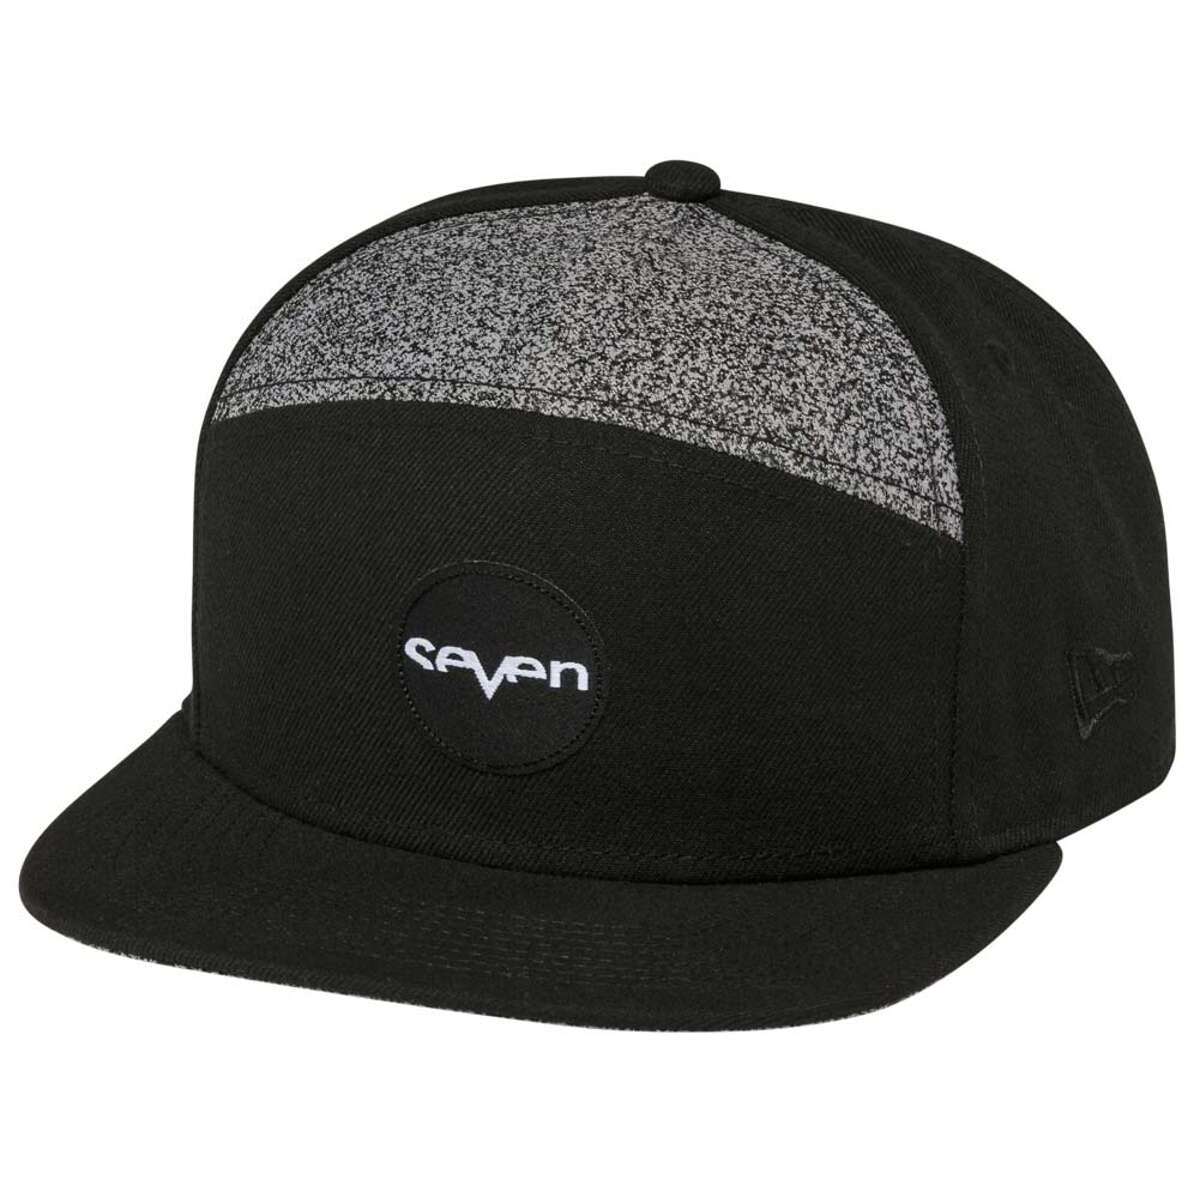 Seven MX Snapback Cap Ozone Grey Speckle